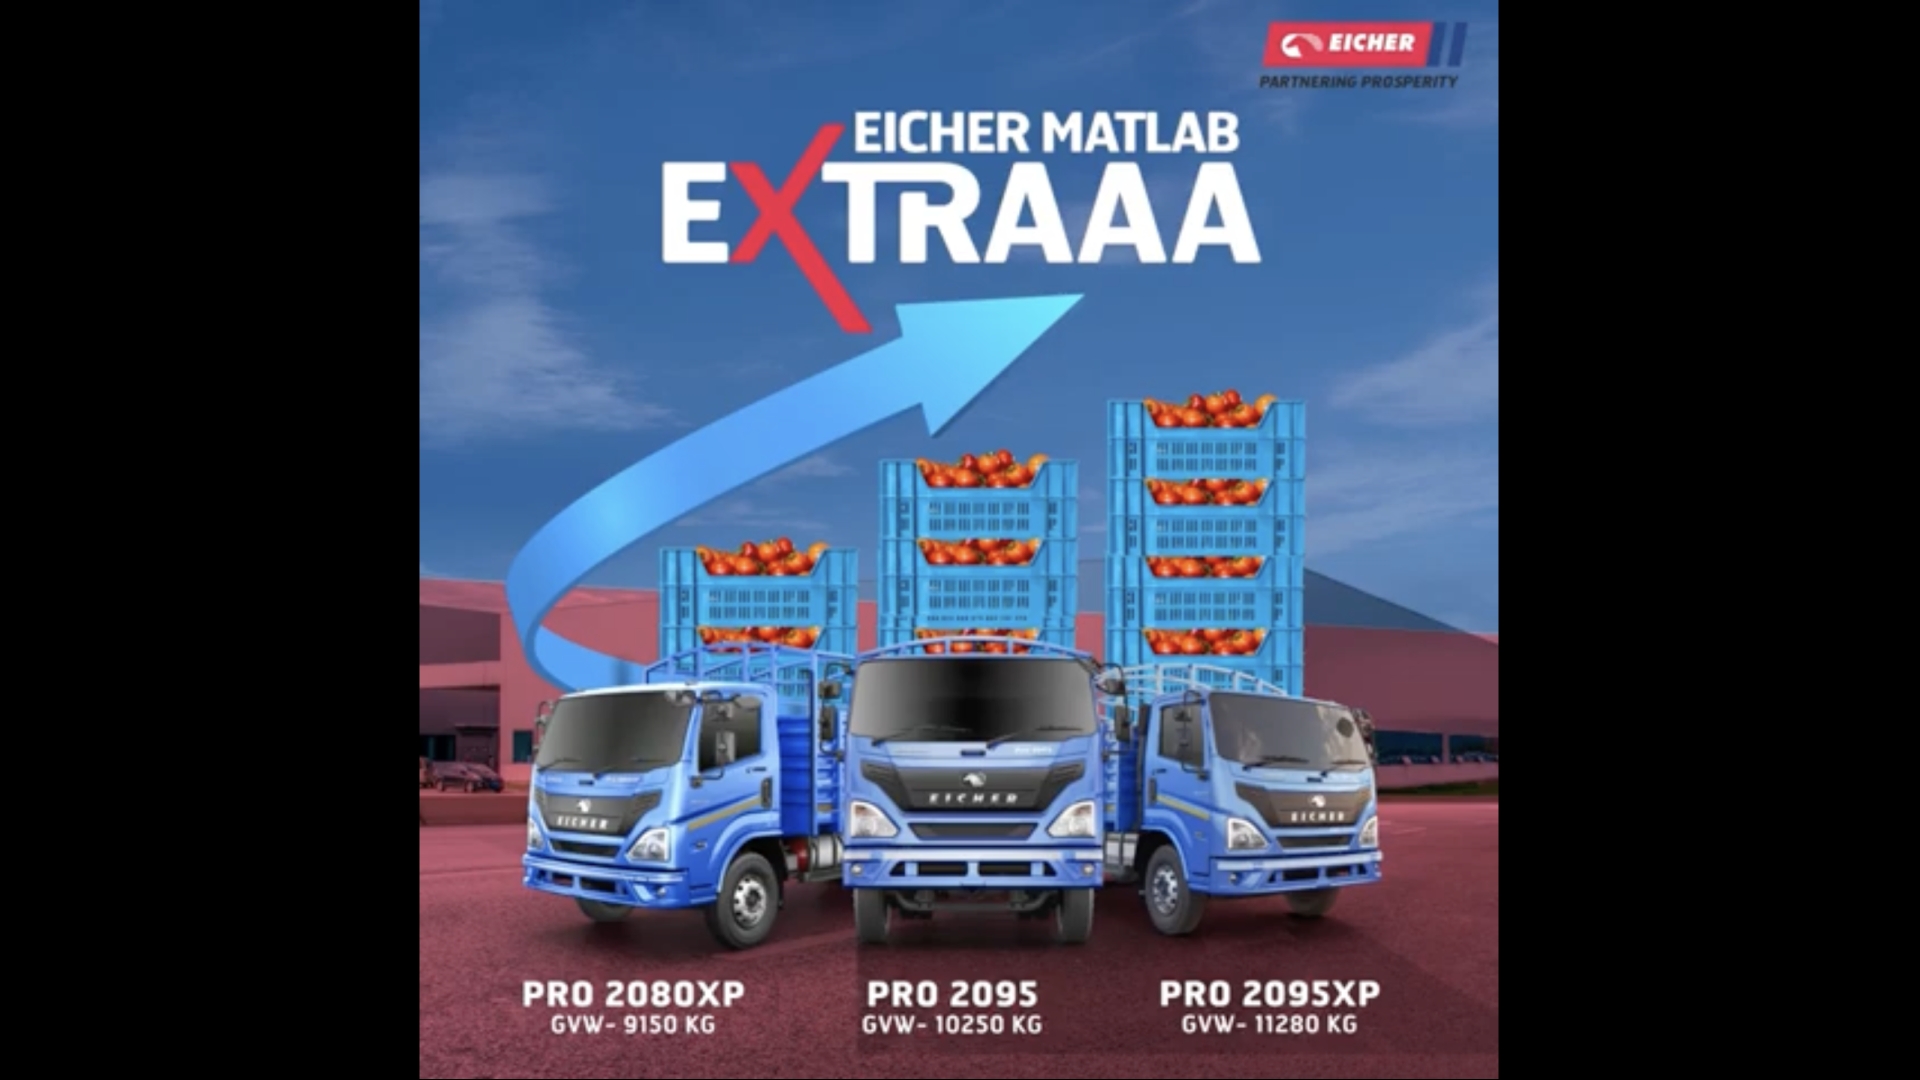 ‘Eicher matlab Extraaa’ 9-11T GVW diesel range